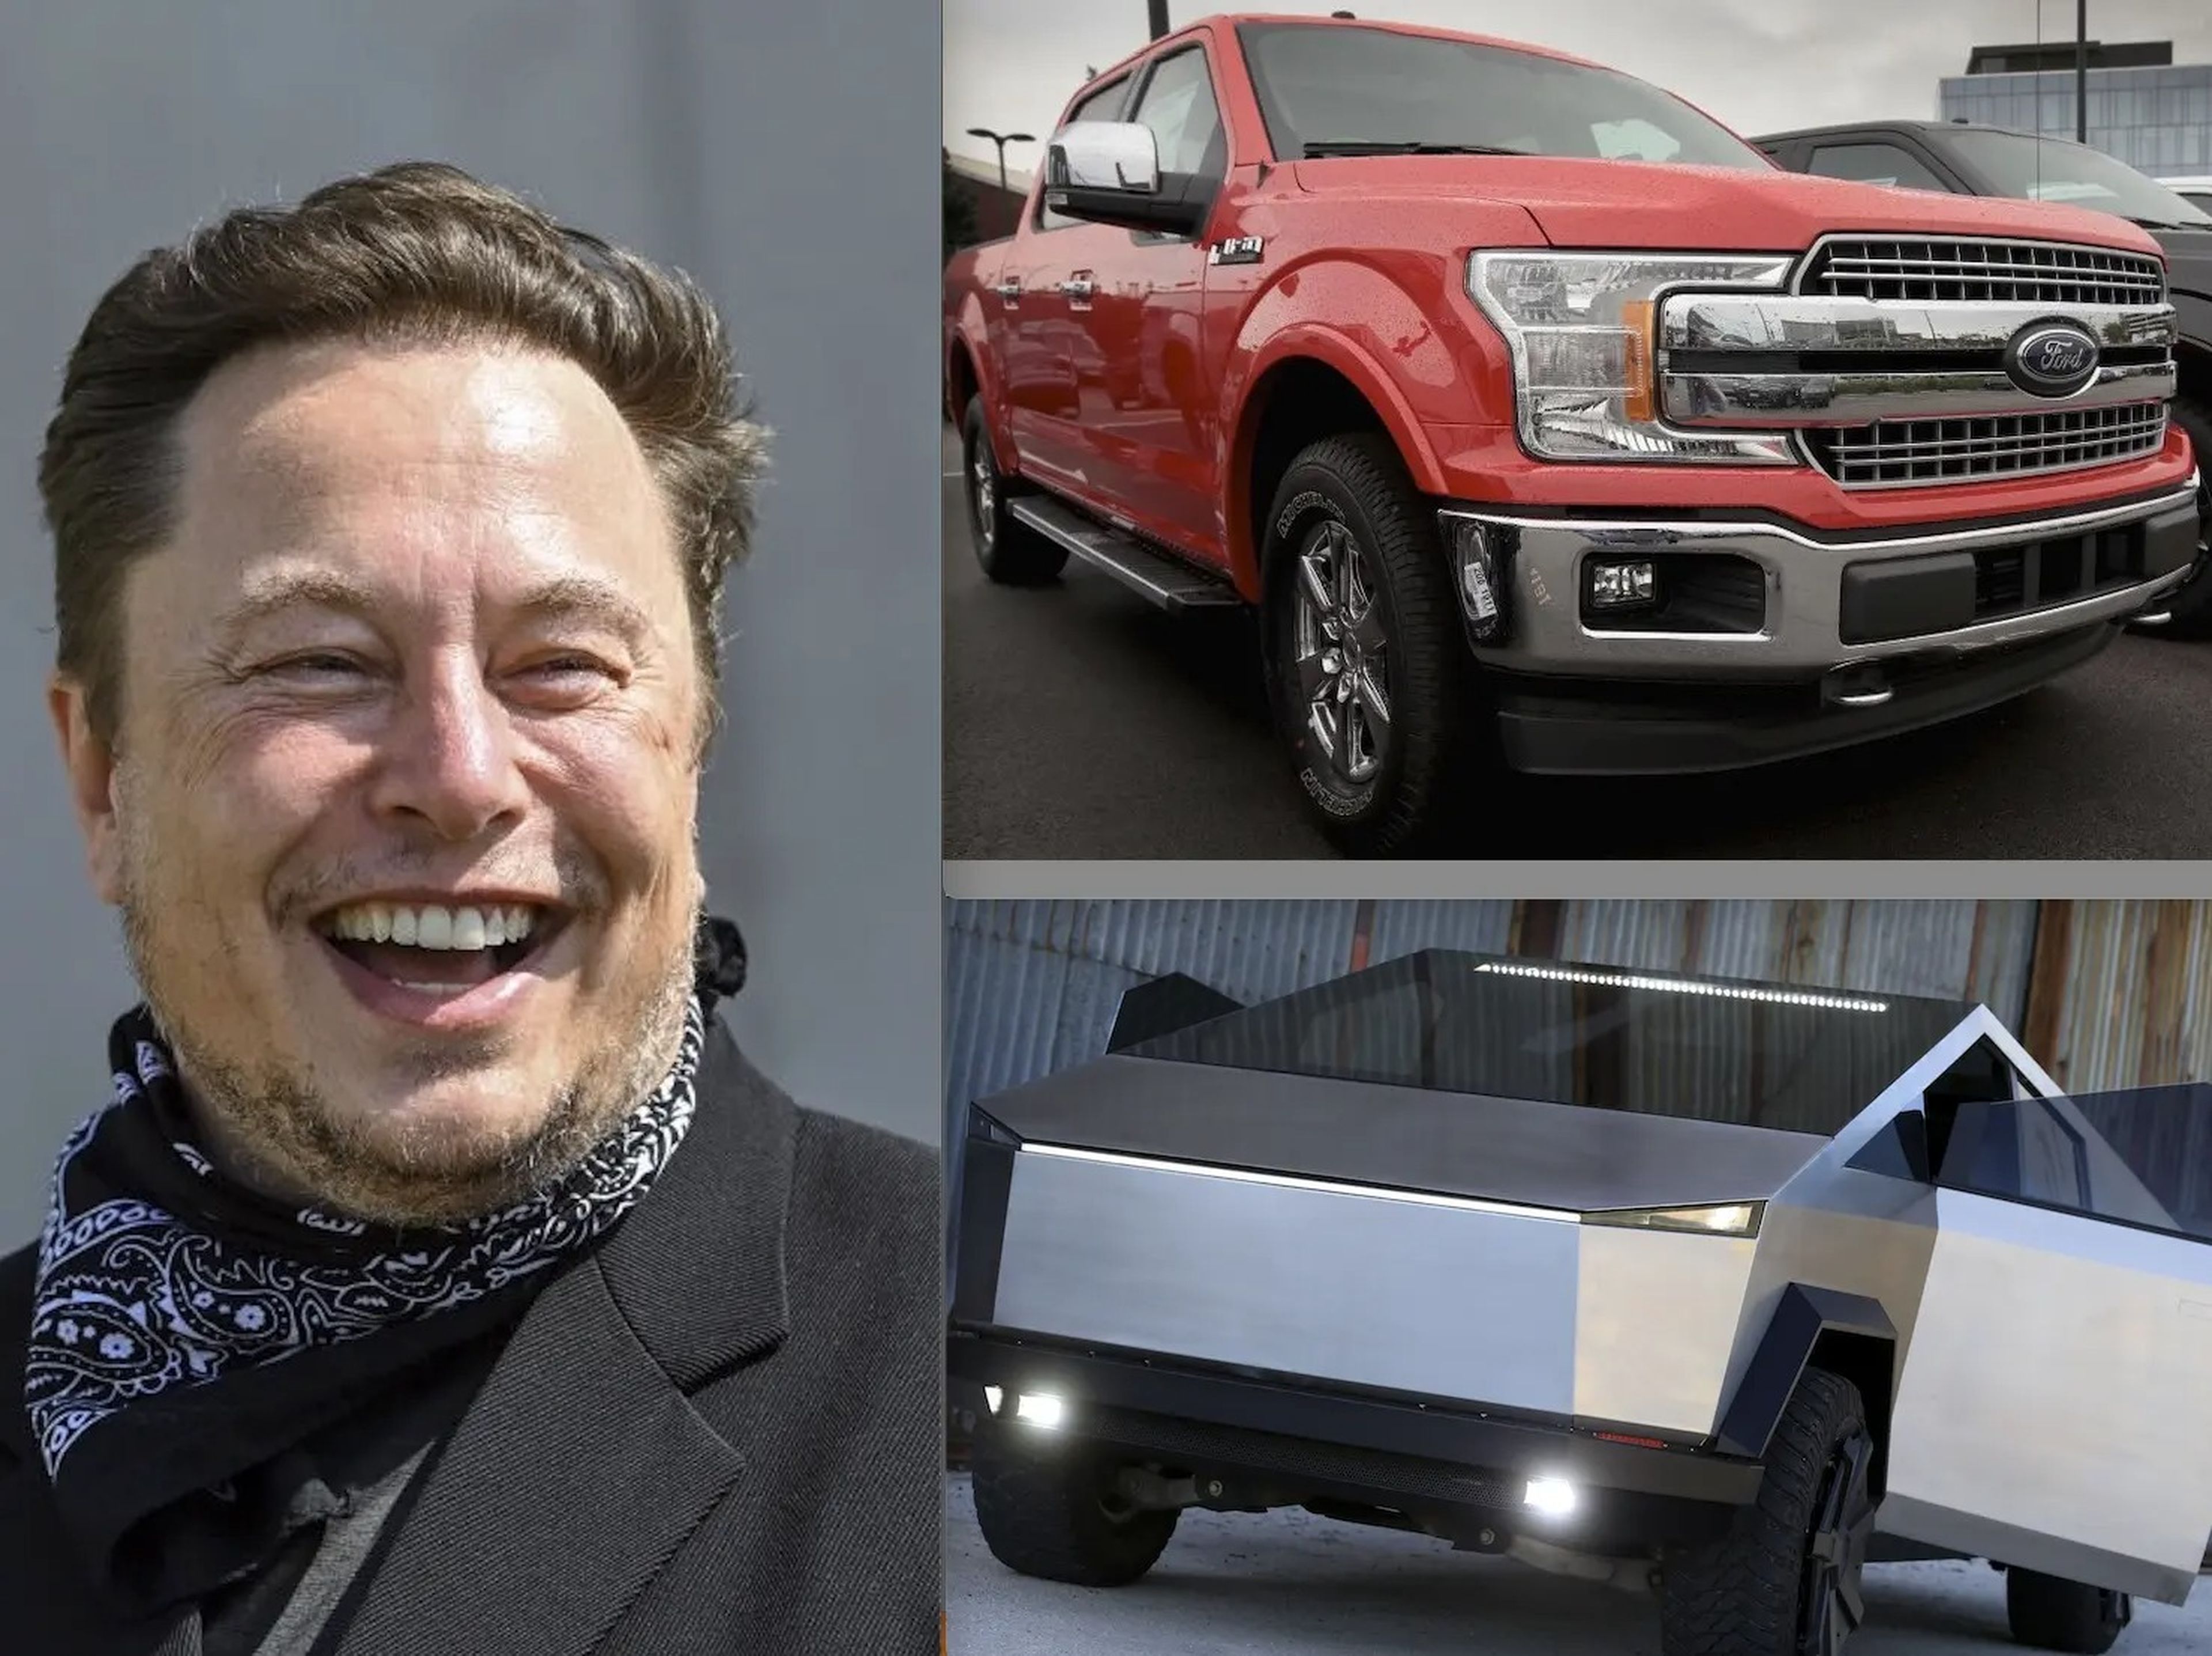 Elon Musk quería crear el Cybertruck porque pensaba que los camiones de Ford eran "aburridos", según Walter Isaacson.